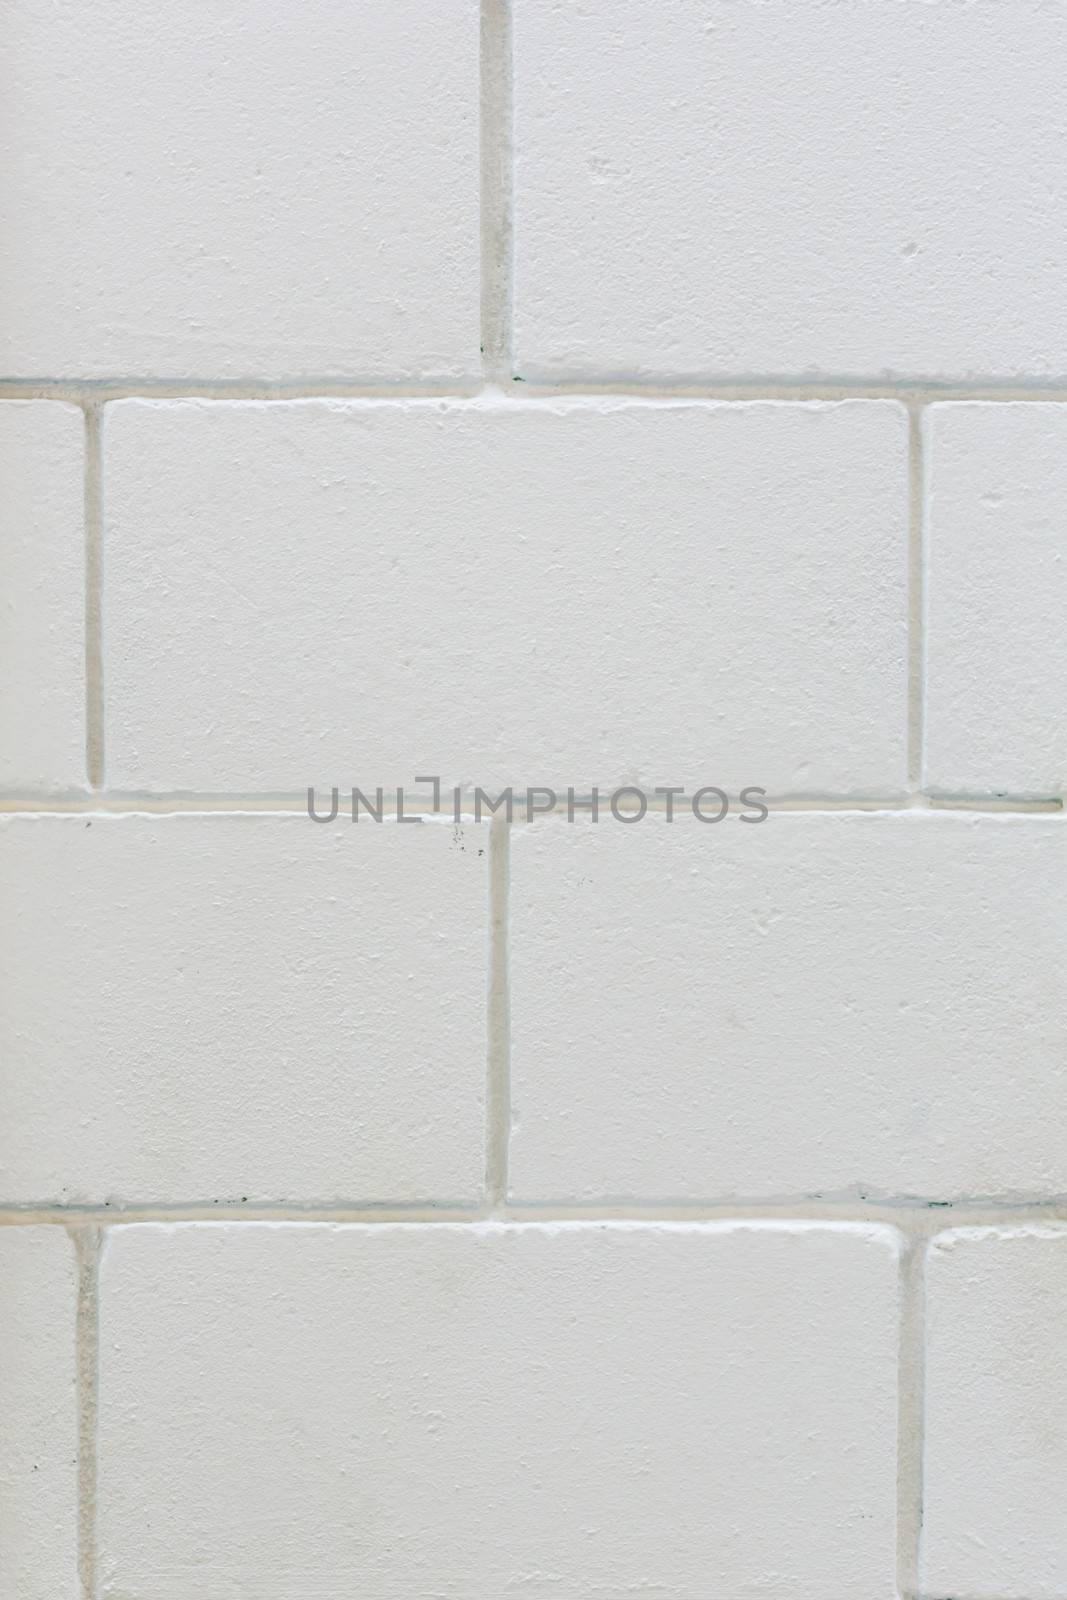 Square white brick wall background